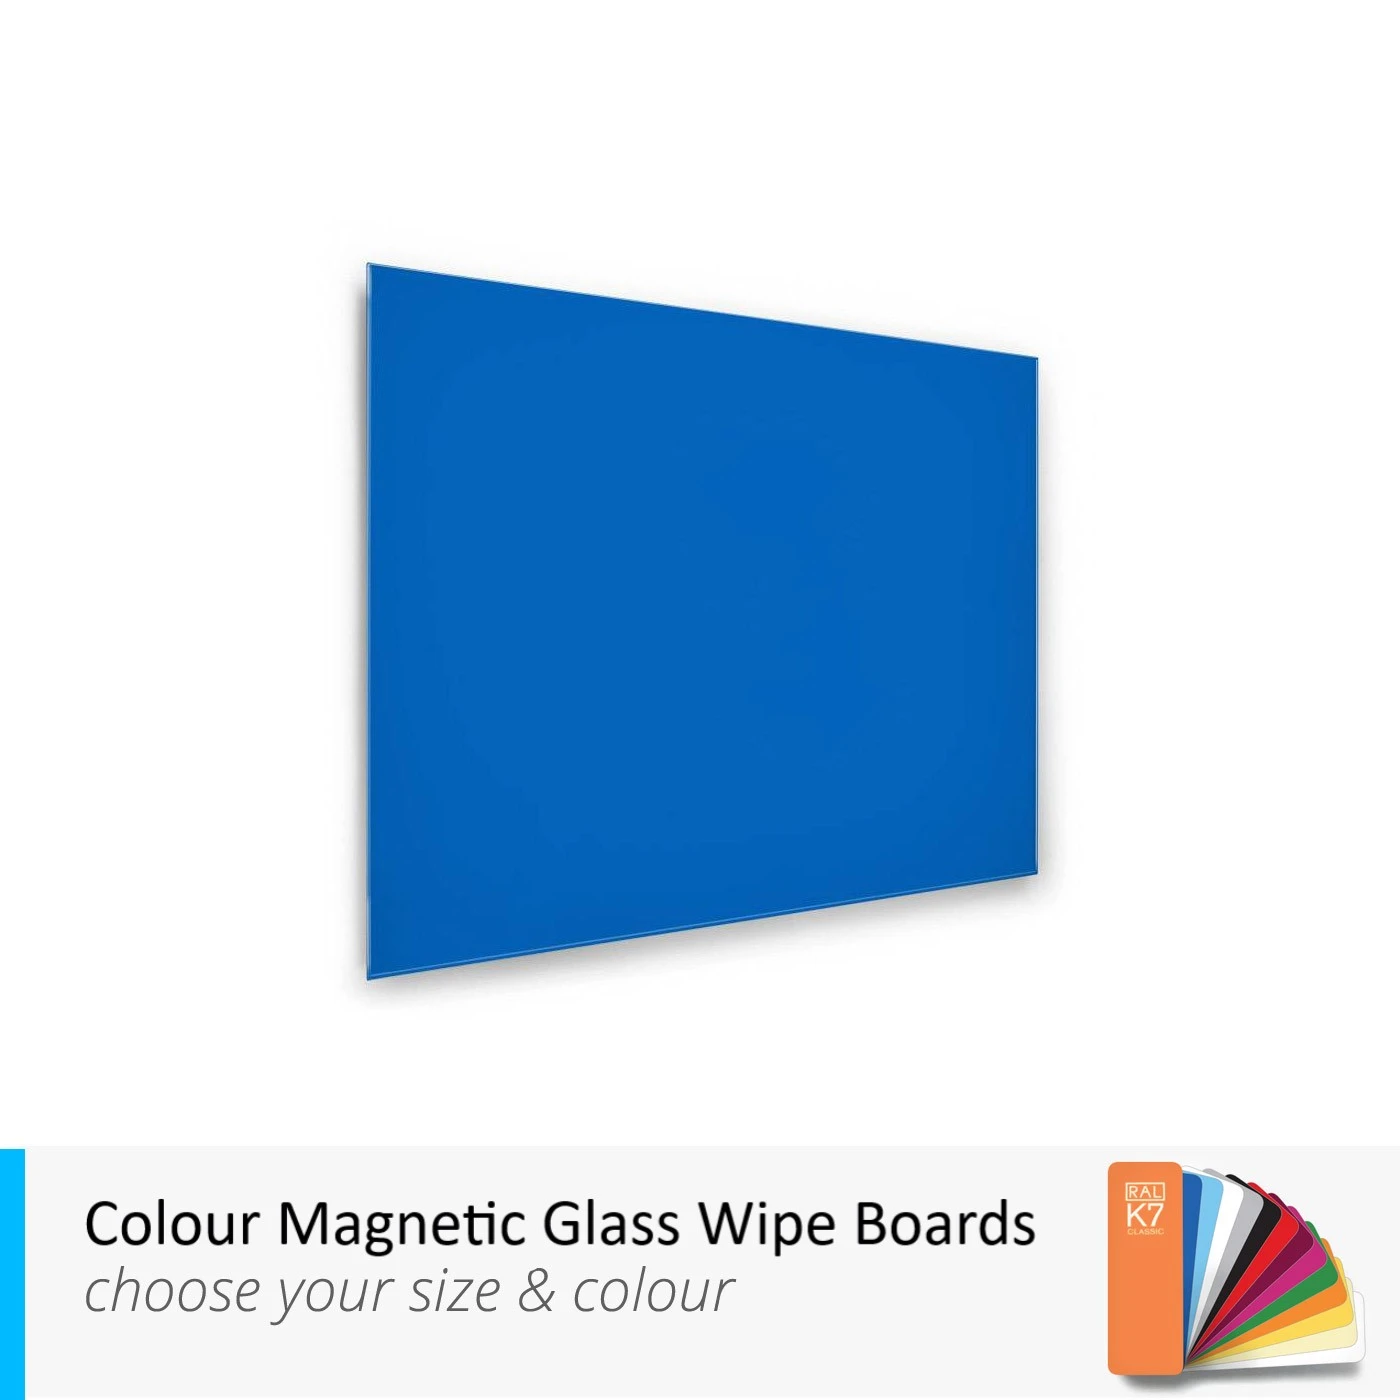 Colour magnetic glass wipe board